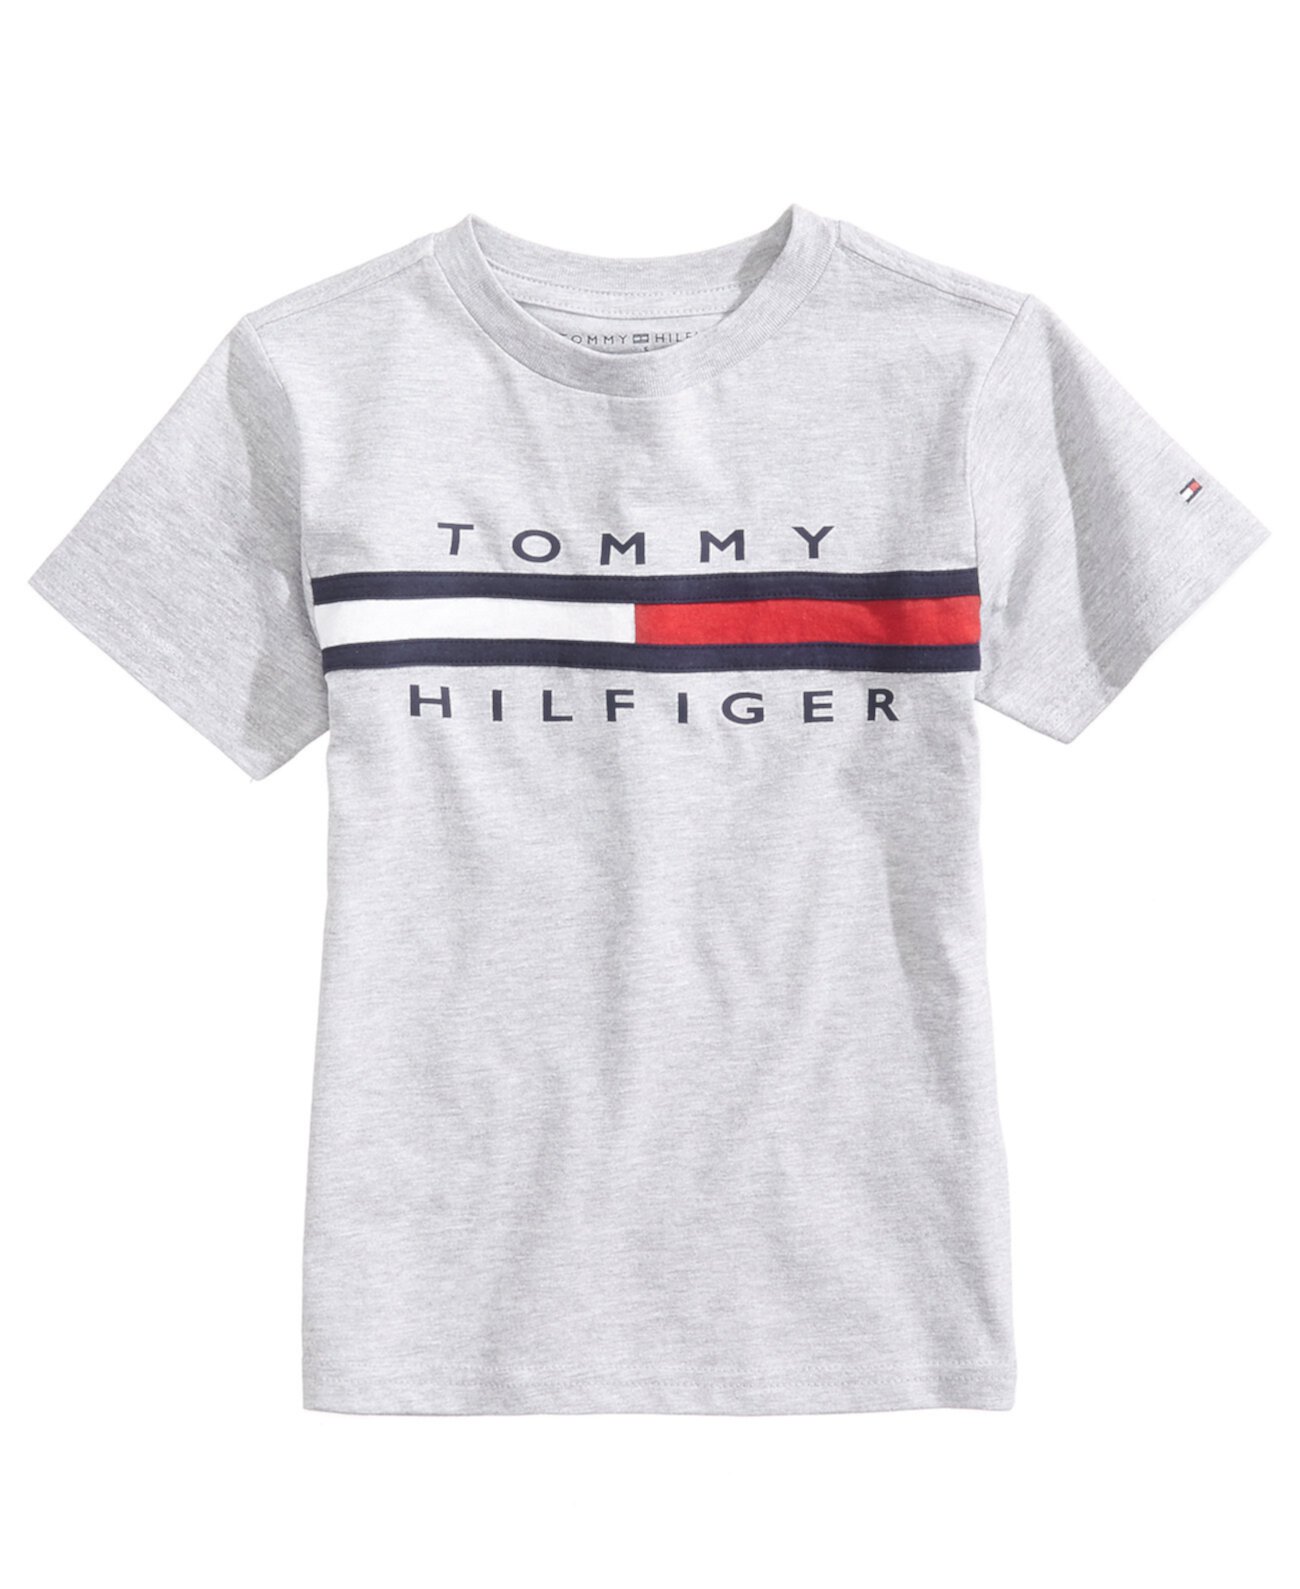 Tommy hilfiger usa. Tommy Hilfiger t Shirt. Принт Томми Хилфигер. Логотип Томми Хилфигер на футболке. Tommy Hilfiger Tokyo футболка.